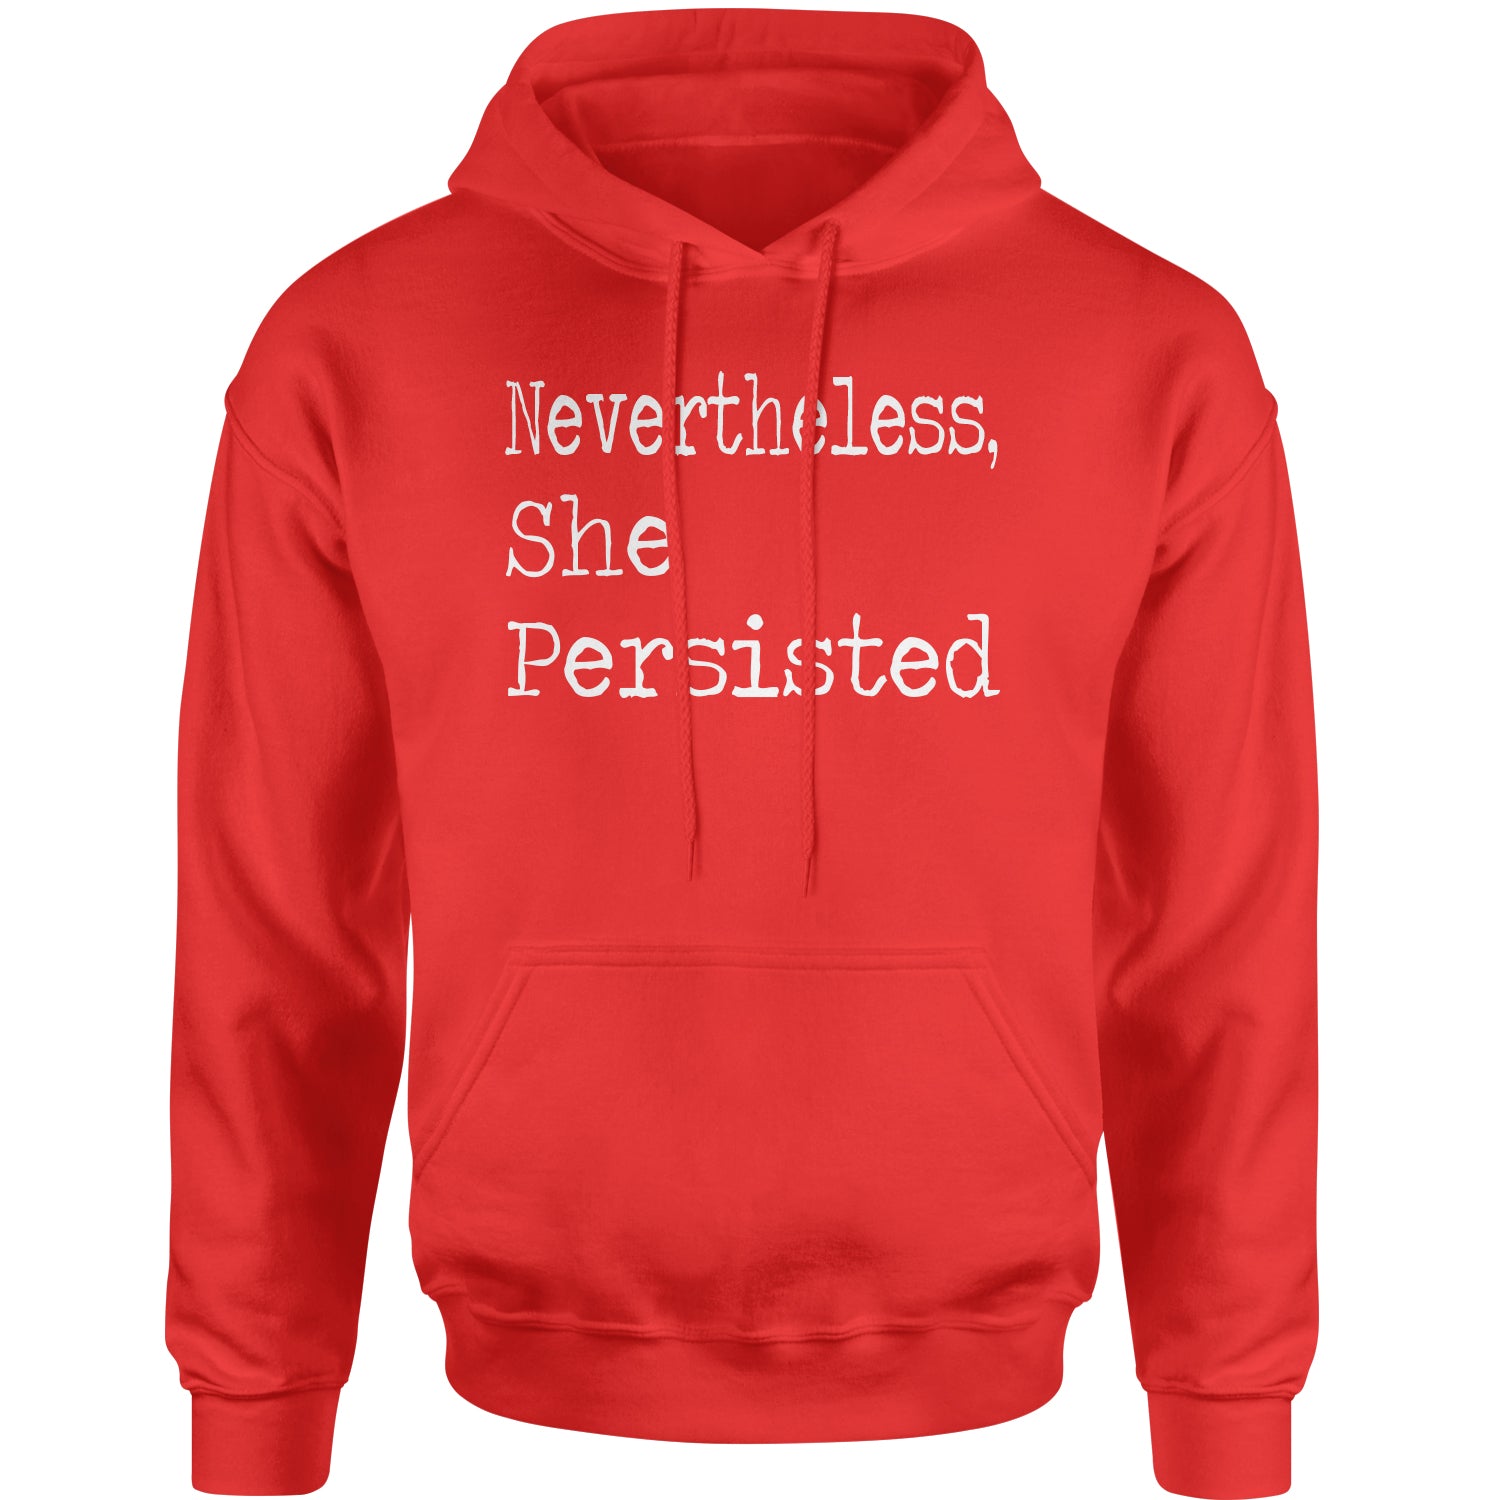 Nevertheless, She Persisted Adult Hoodie Sweatshirt 2020, feminism, feminist, kamala, letlizspeak, mamala, mcconnell, mitch, momala, mommala by Expression Tees